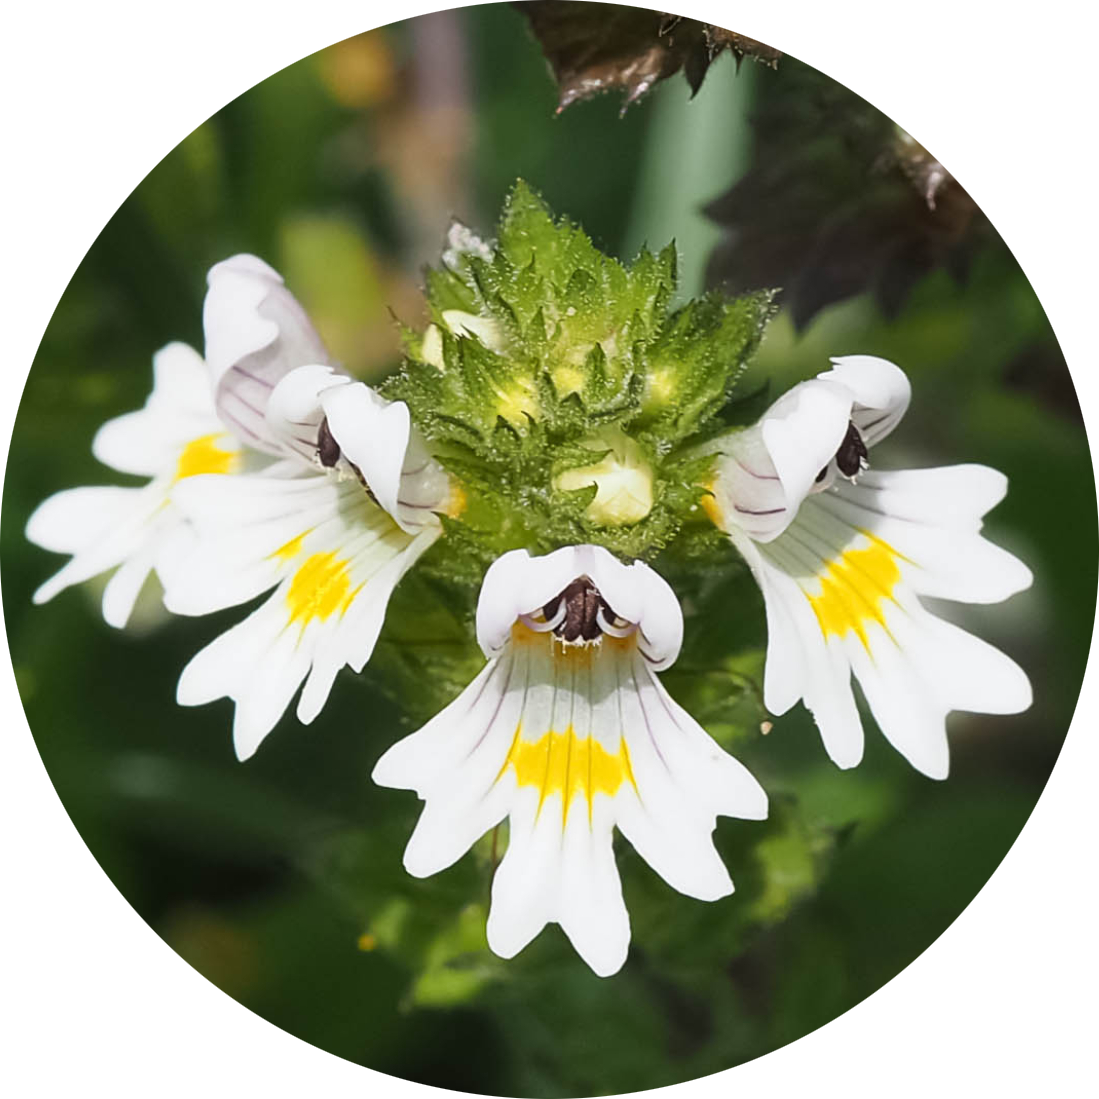 Vidac, beli cvetić u obliku zevalice